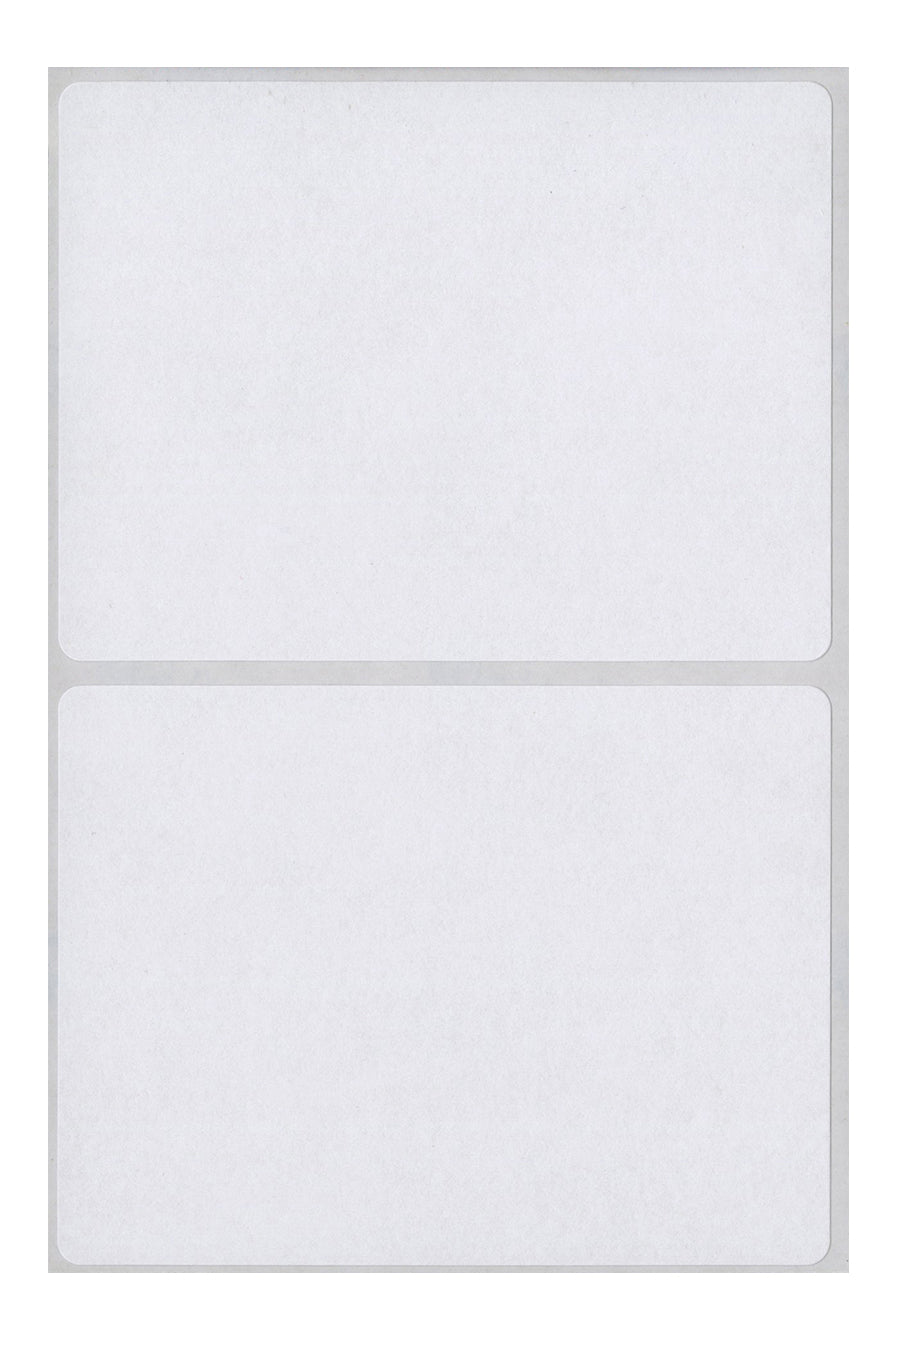 White Multi-Purpose Labels, 4" x 3", Rectangle, 80/Bx